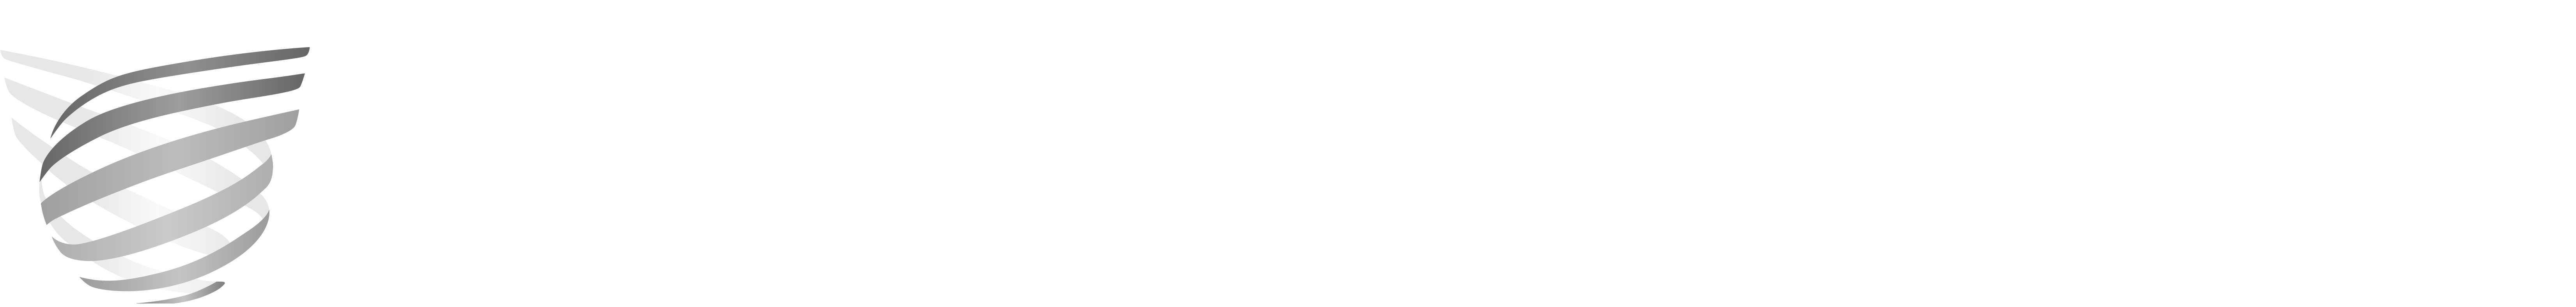 Logo PrimeGlobal